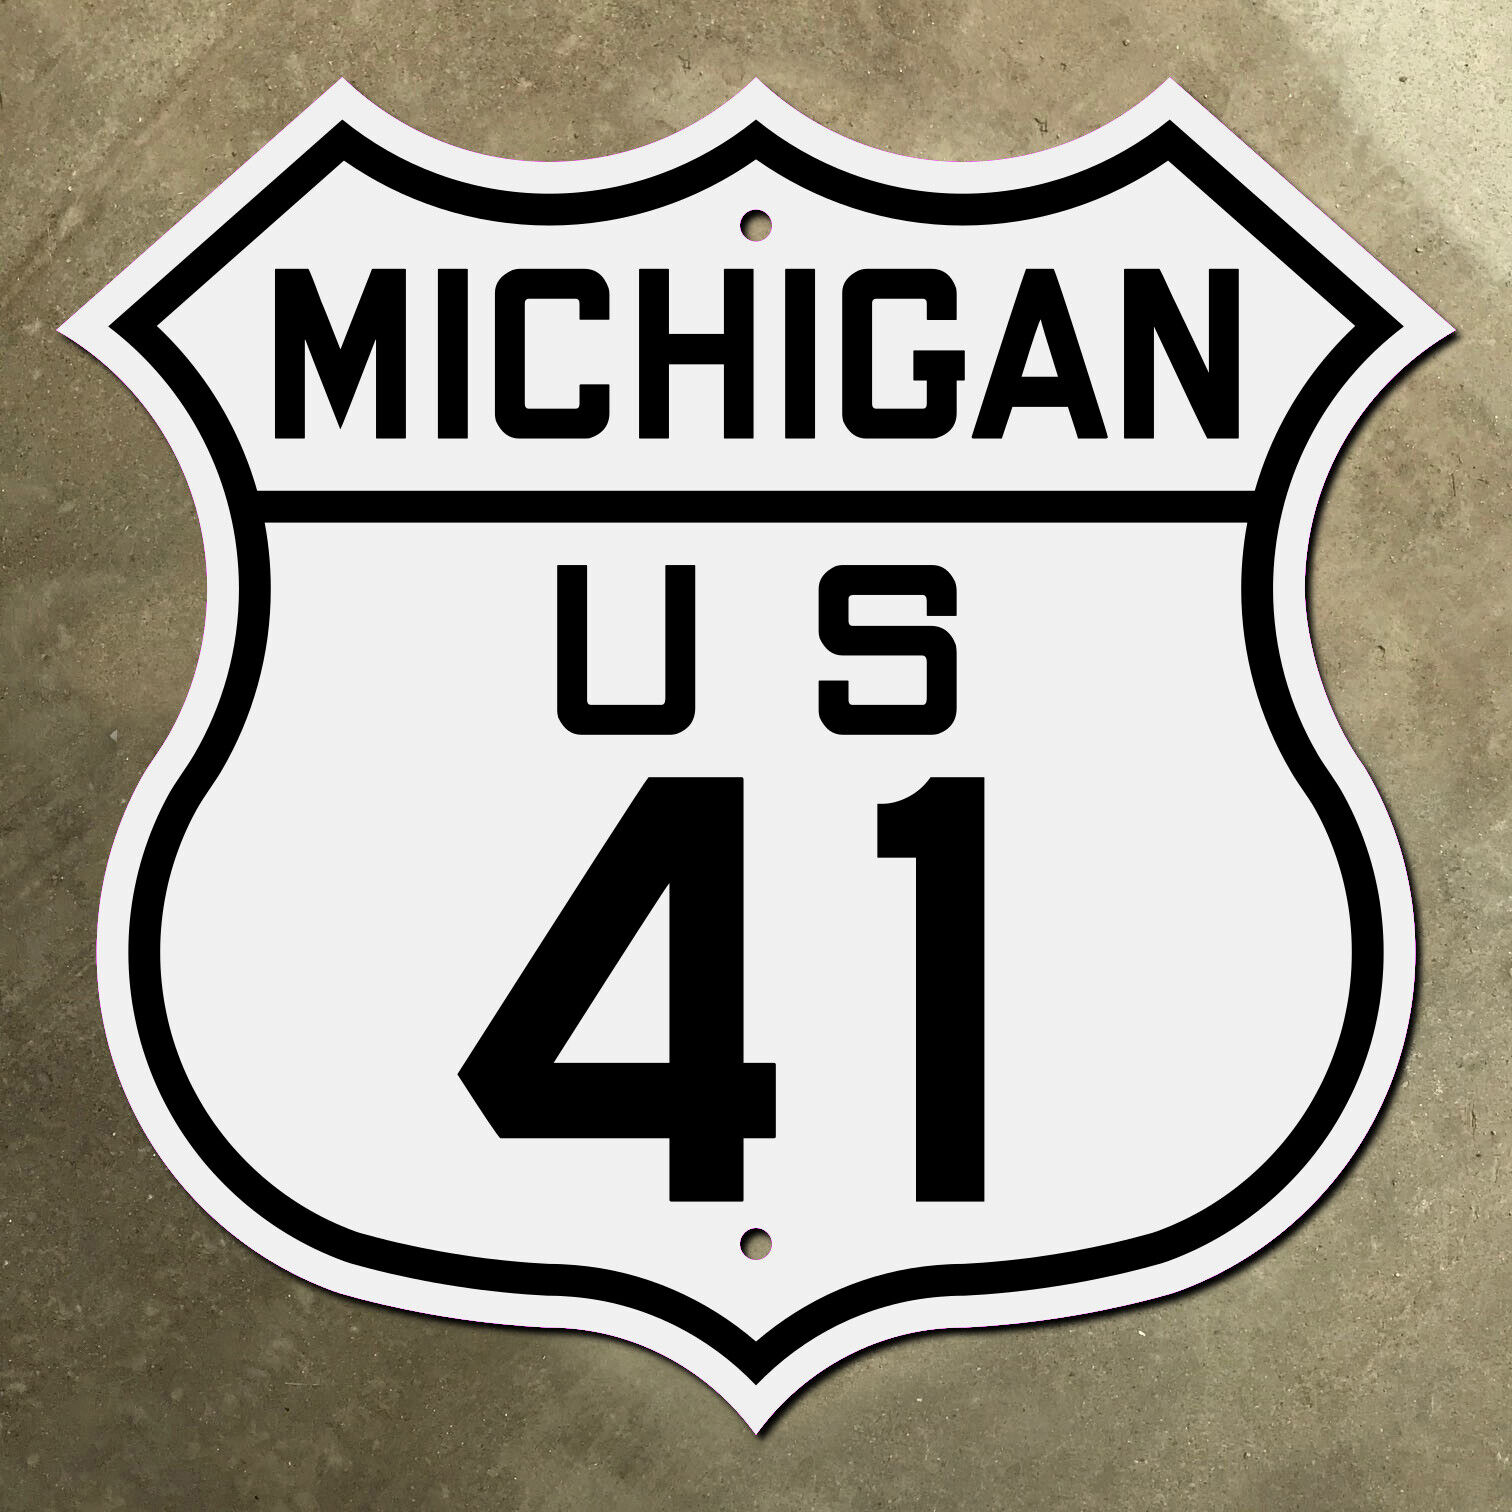 Michigan US route 41 highway marker road sign Upper Peninsula Lake Superior